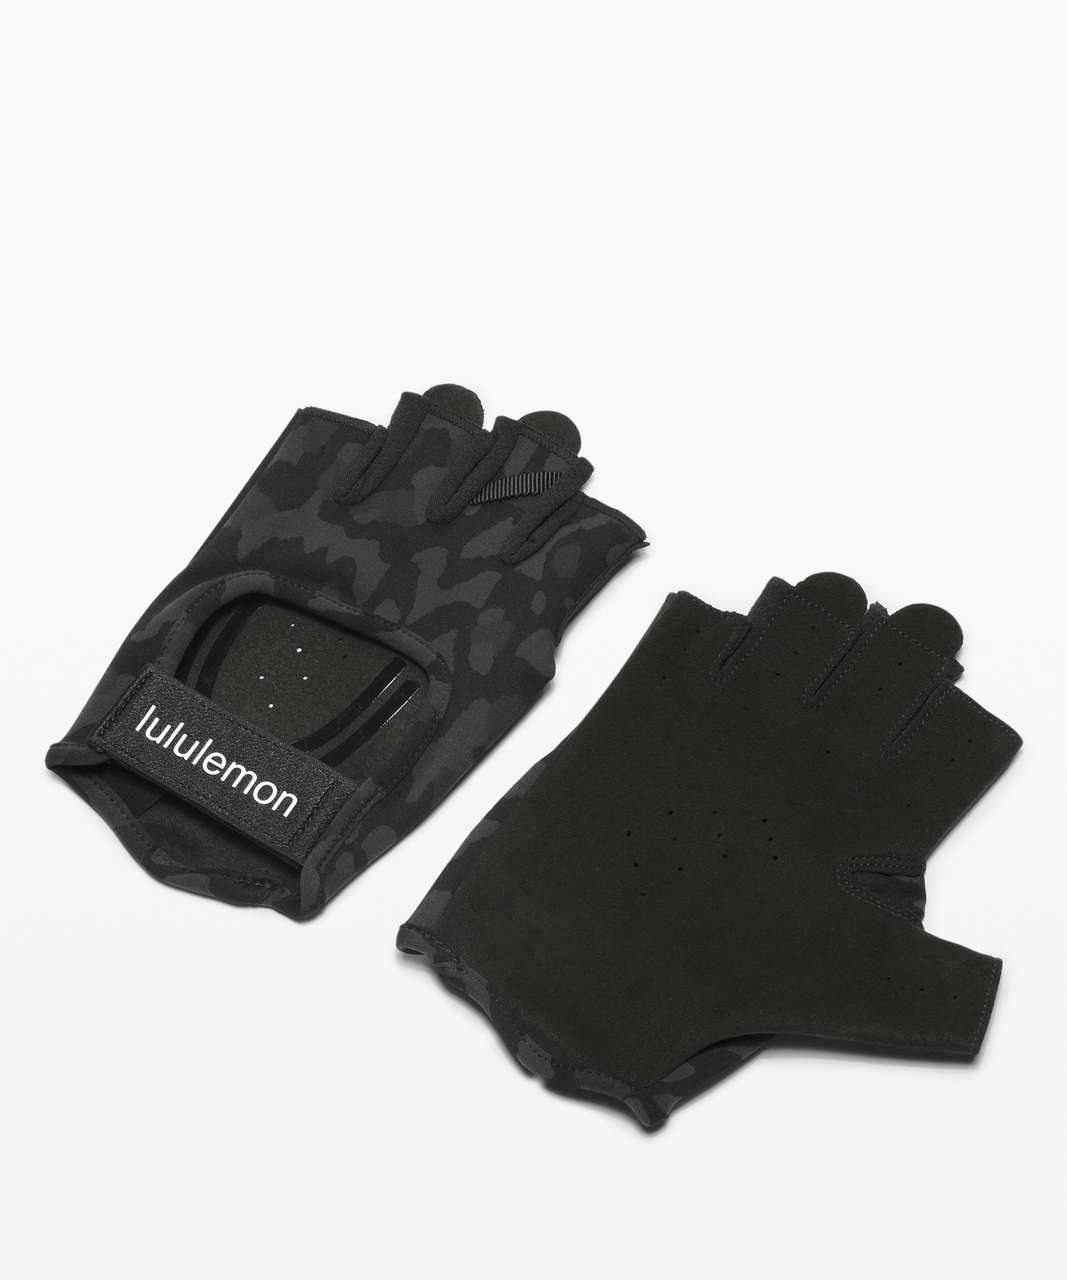 Lululemon Uplift Training Gloves - Formation Camo Deep Coal Multi  / Black